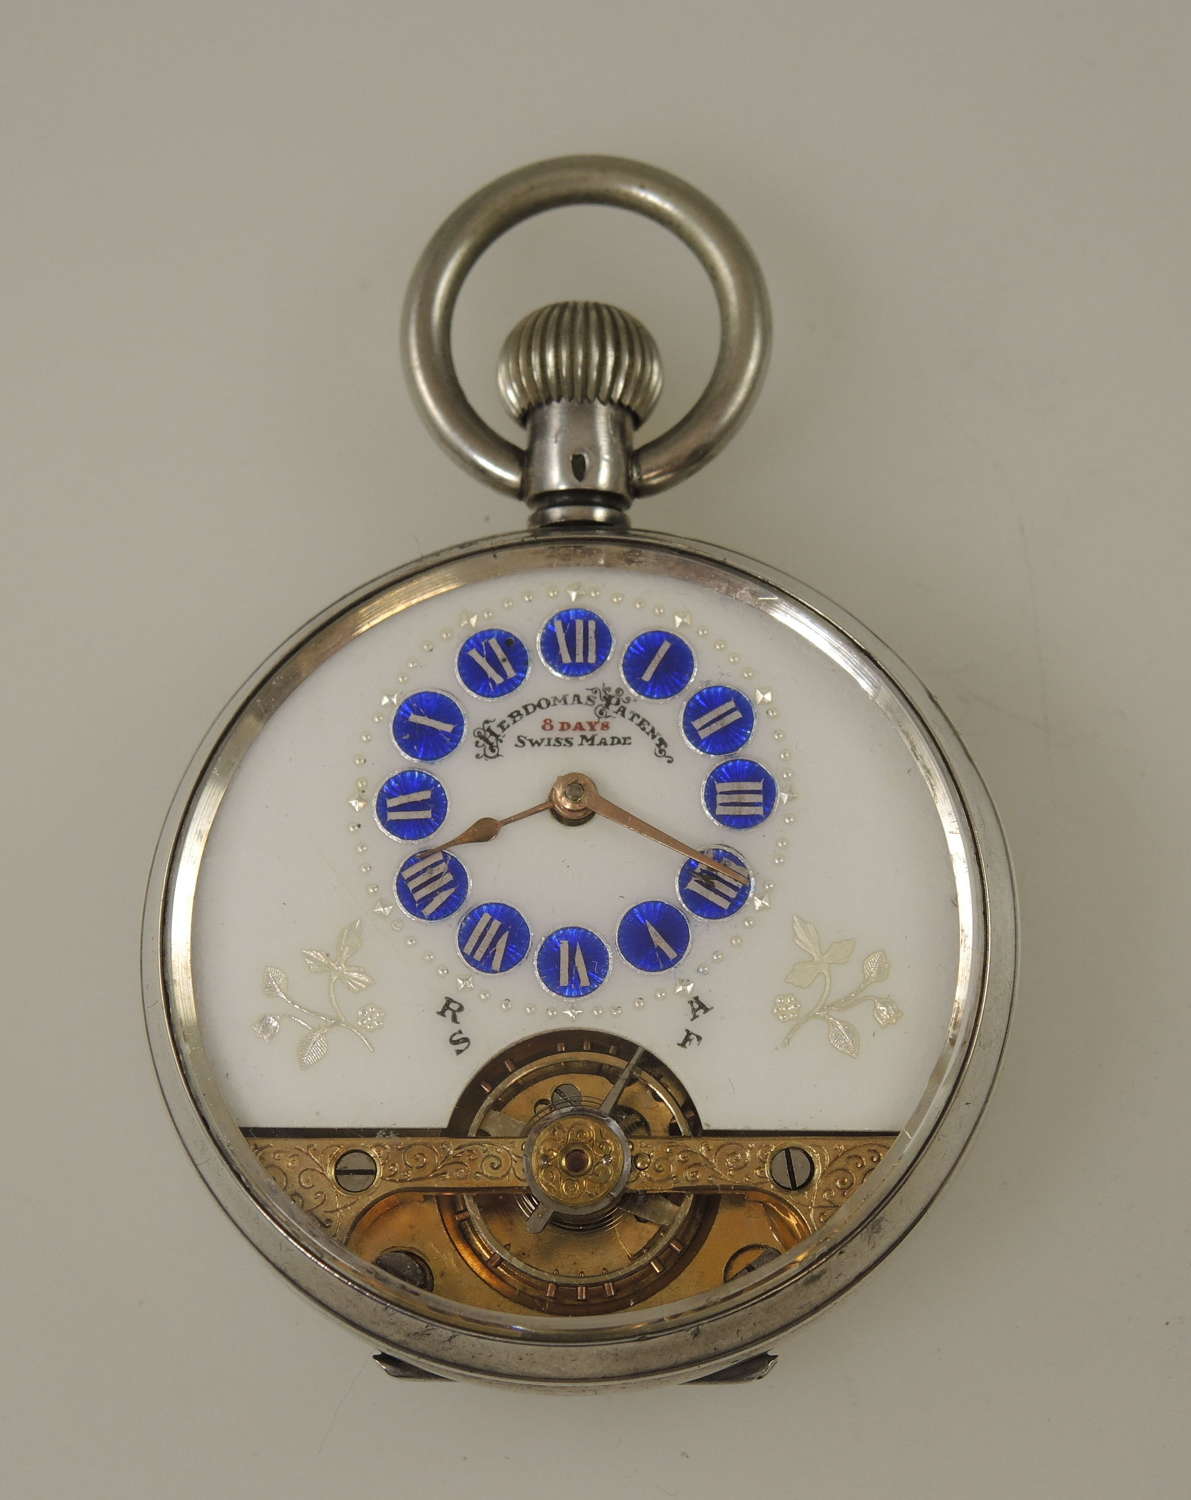 Silver Hebdomas 8 day pocket watch with blue enamel dial c1915